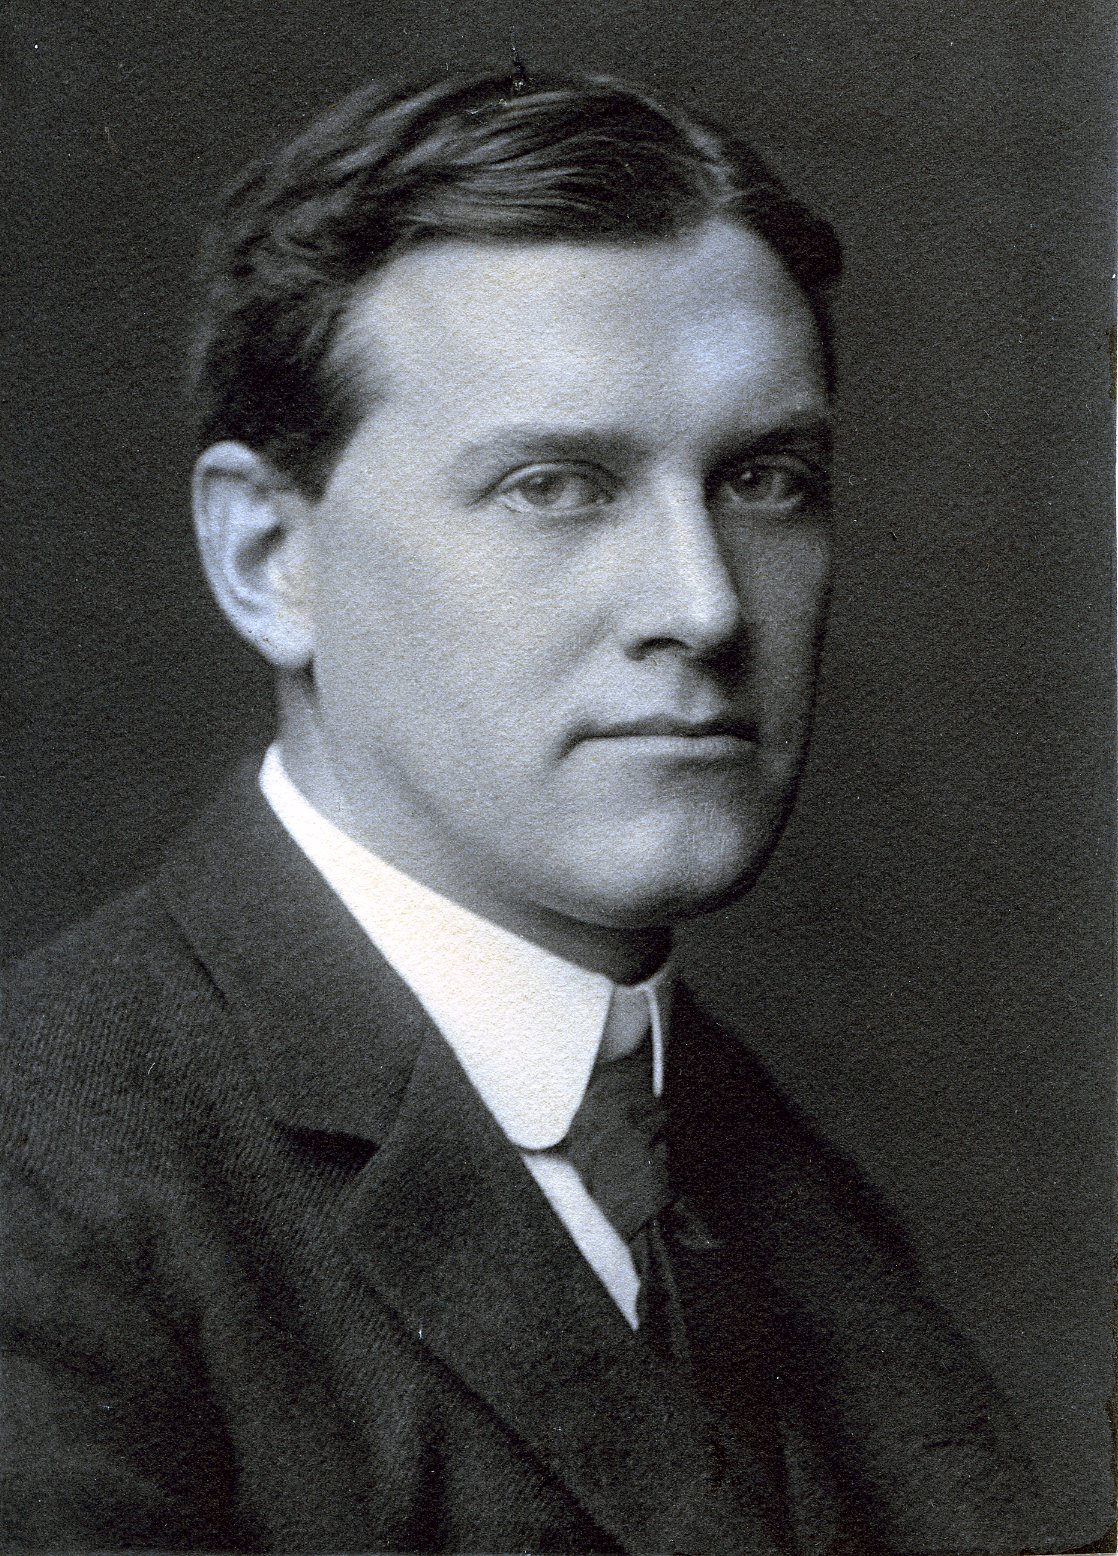 Member portrait of Thomas C. Wood